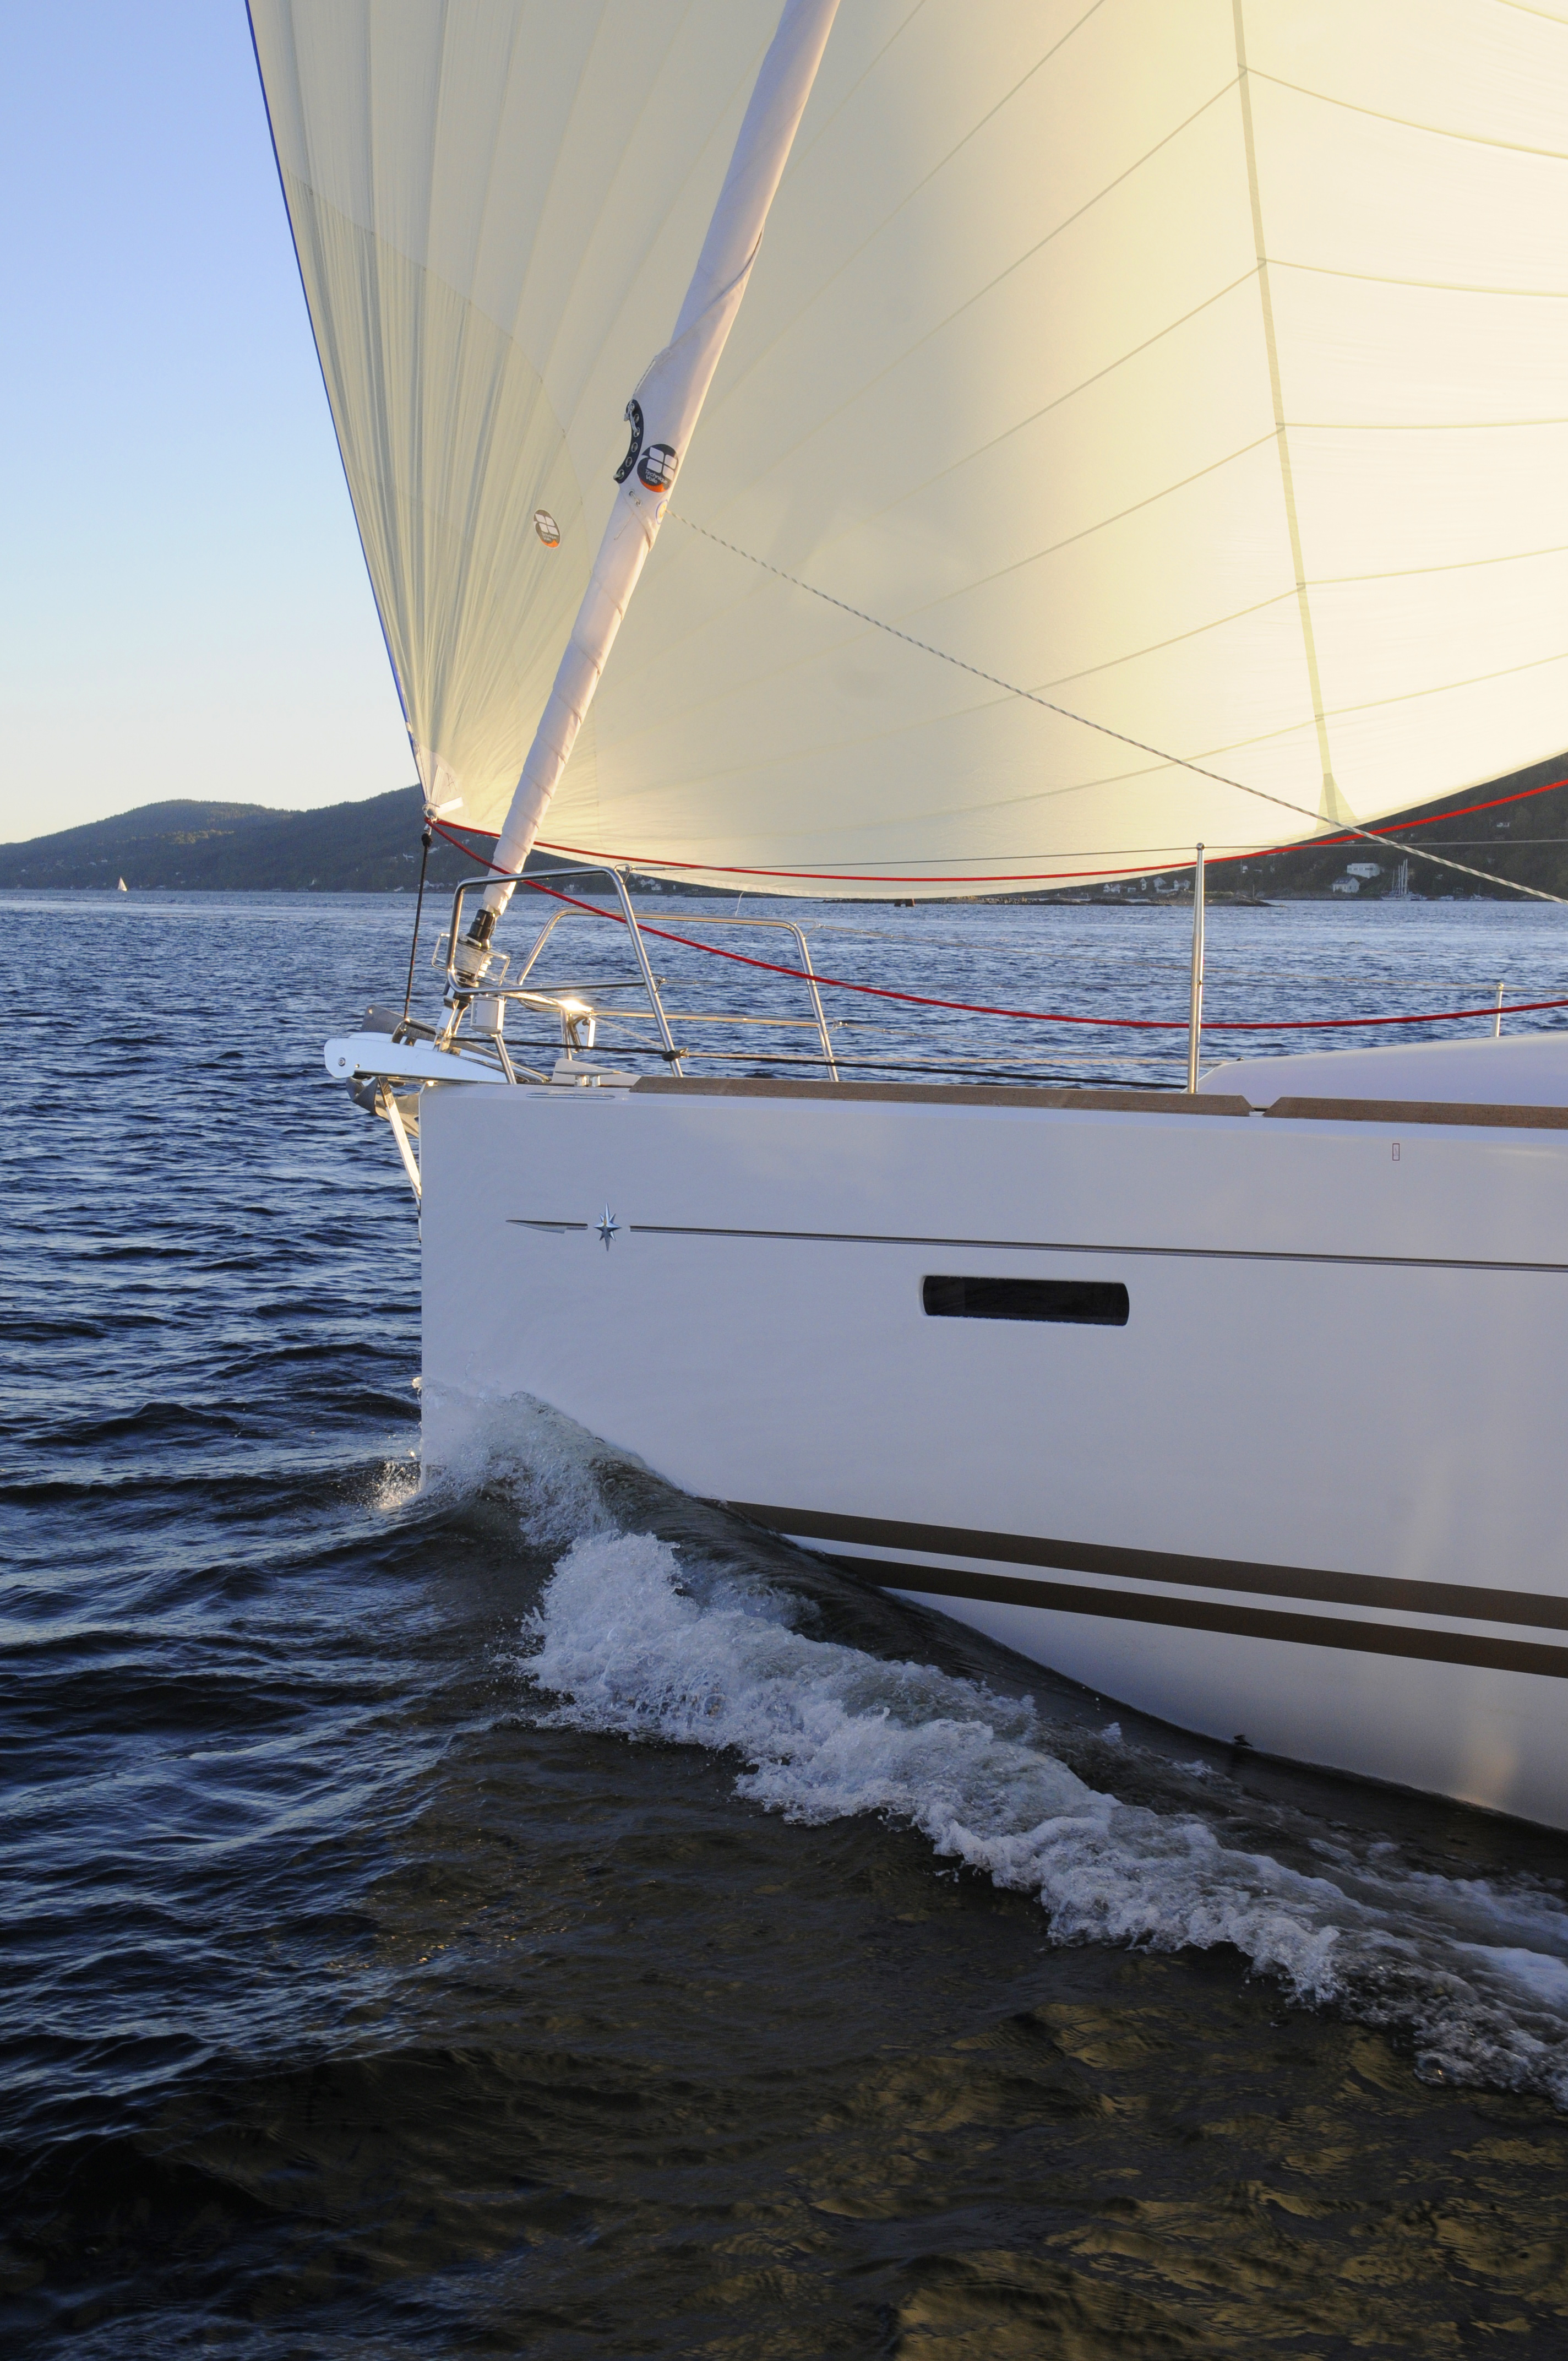 Jeanneau Sun Odyssey 409 sailing close to Dr¿bak in Oslo Fjord.
Photo: Axel Nissen-Lie/Seilas